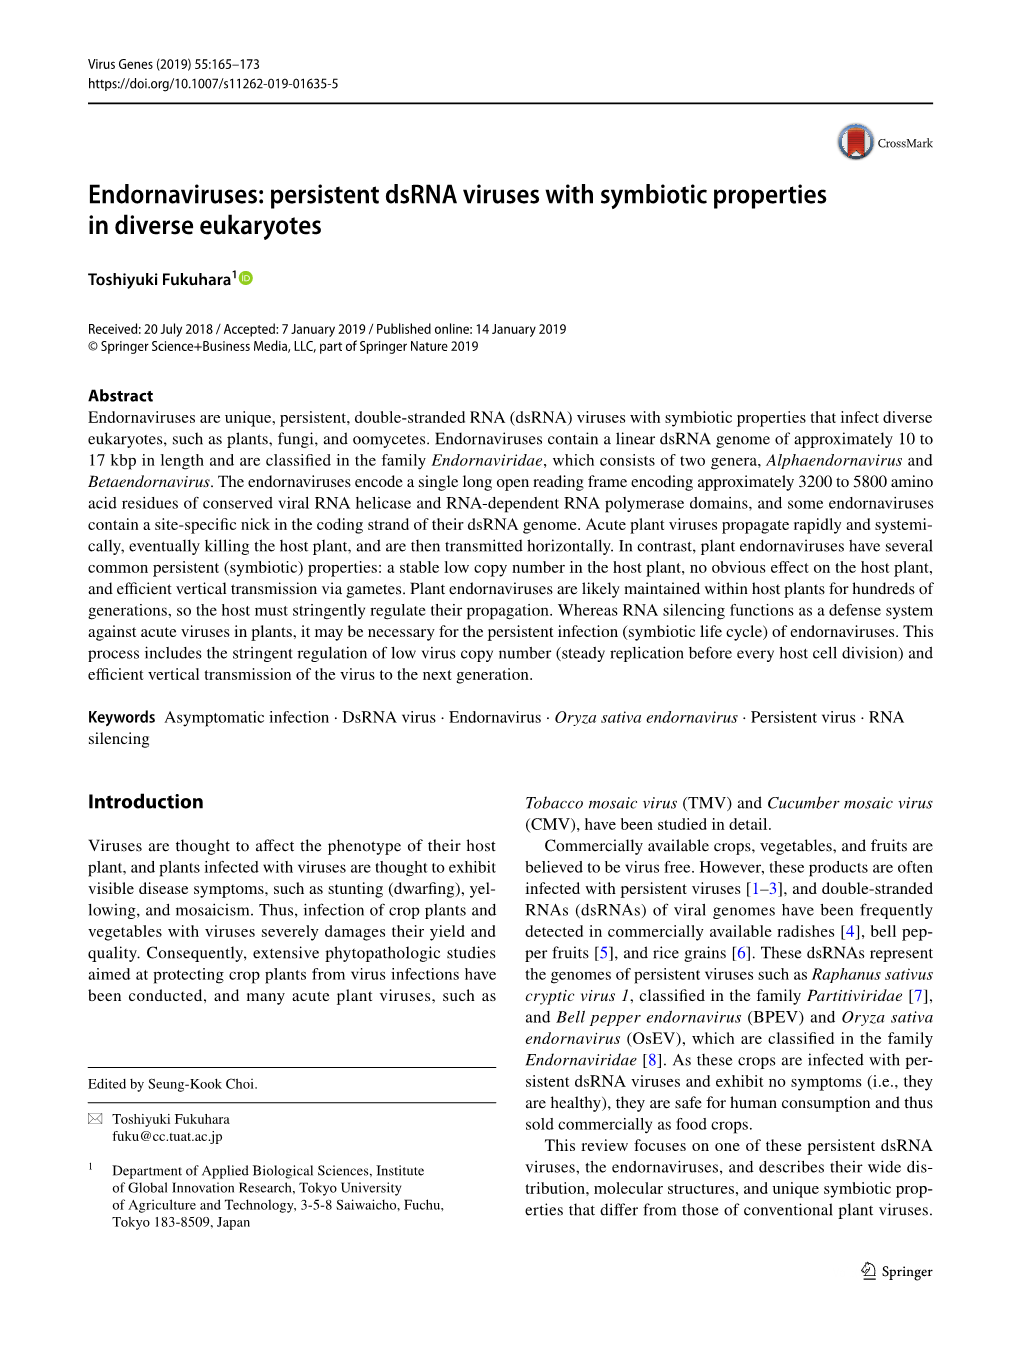 Endornaviruses: Persistent Dsrna Viruses with Symbiotic Properties in Diverse Eukaryotes